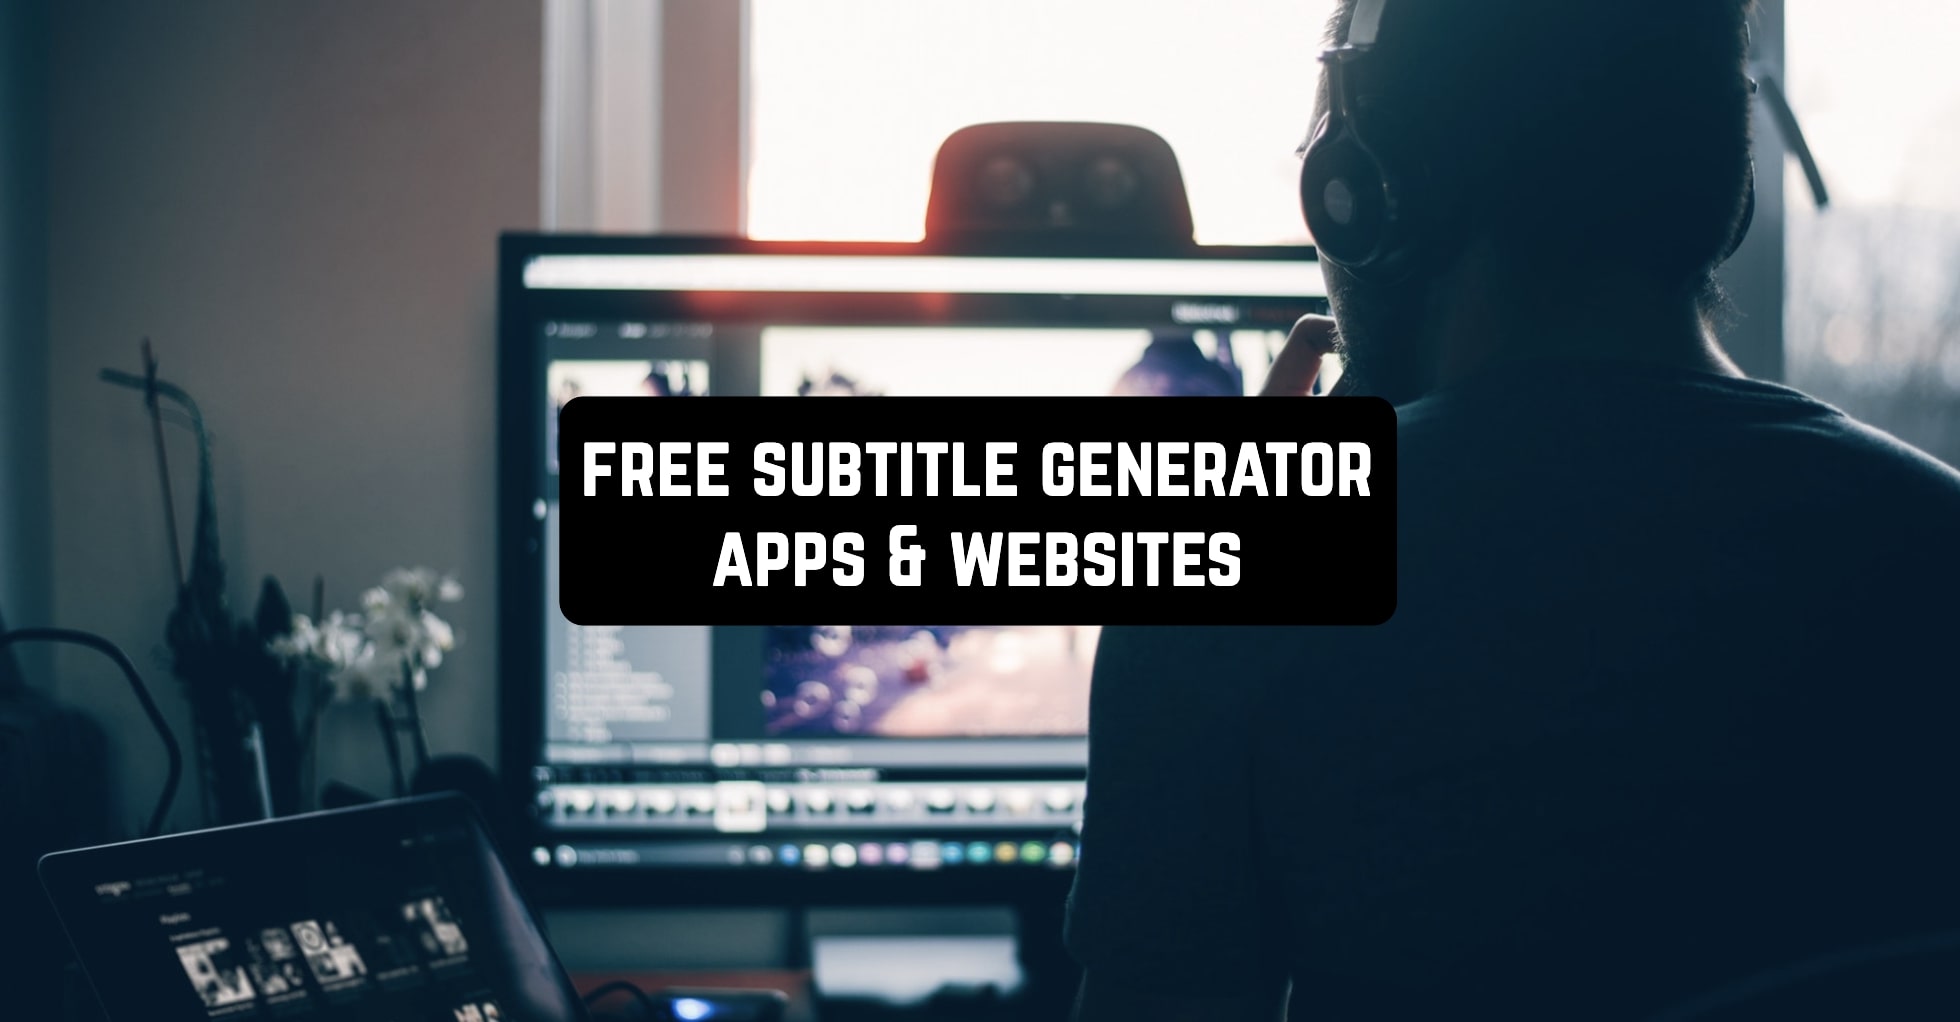 Free-Subtitle-Generator-Apps-Websites